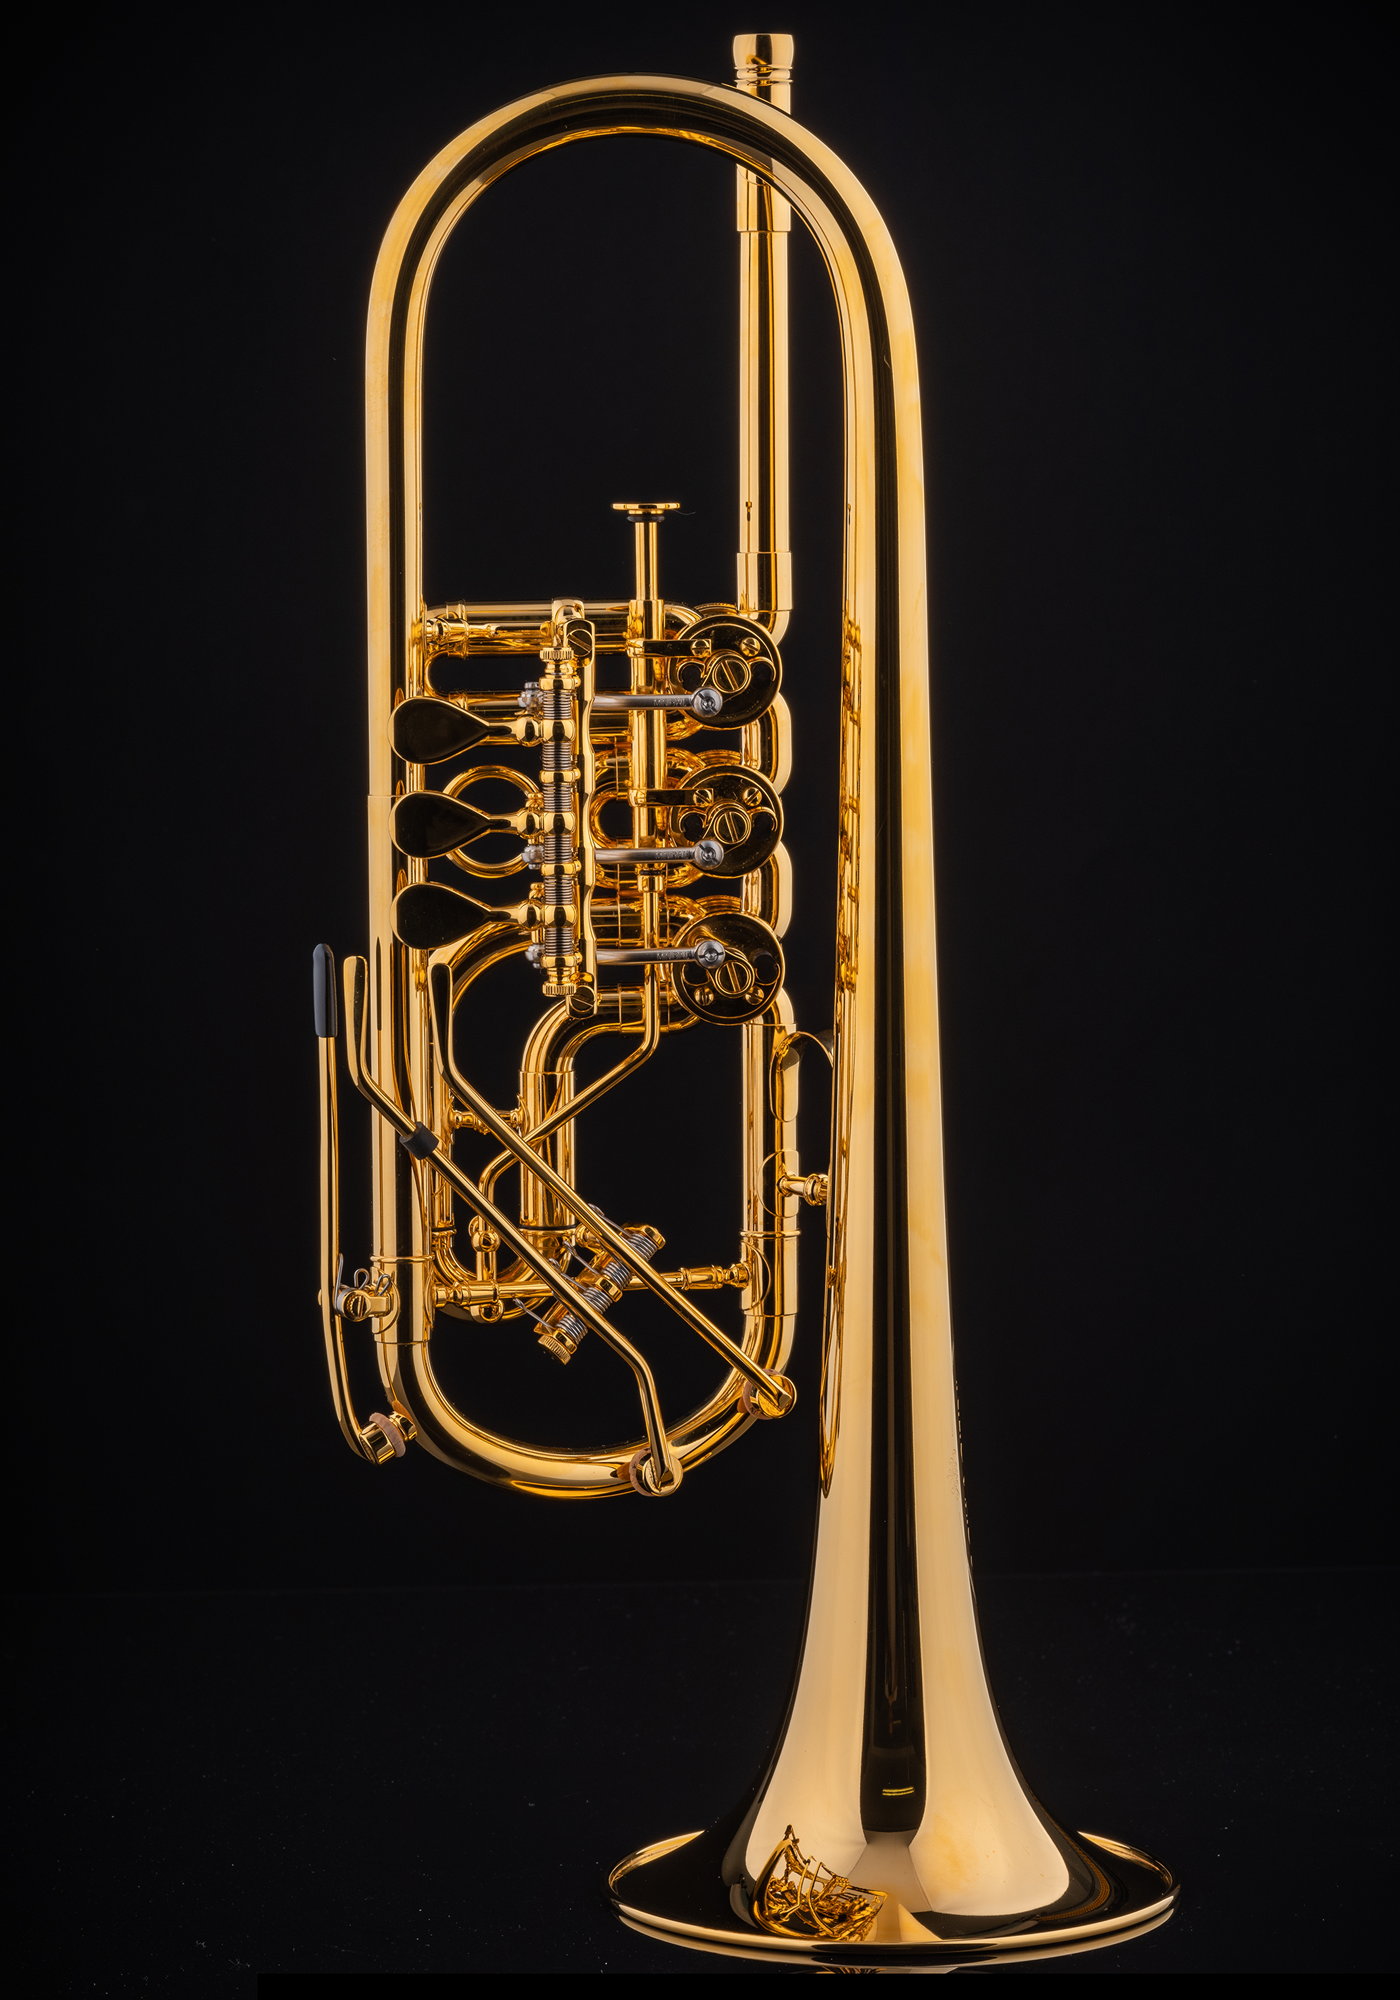 Schagerl C-Trompete "BERLIN Z" heavy vergoldet